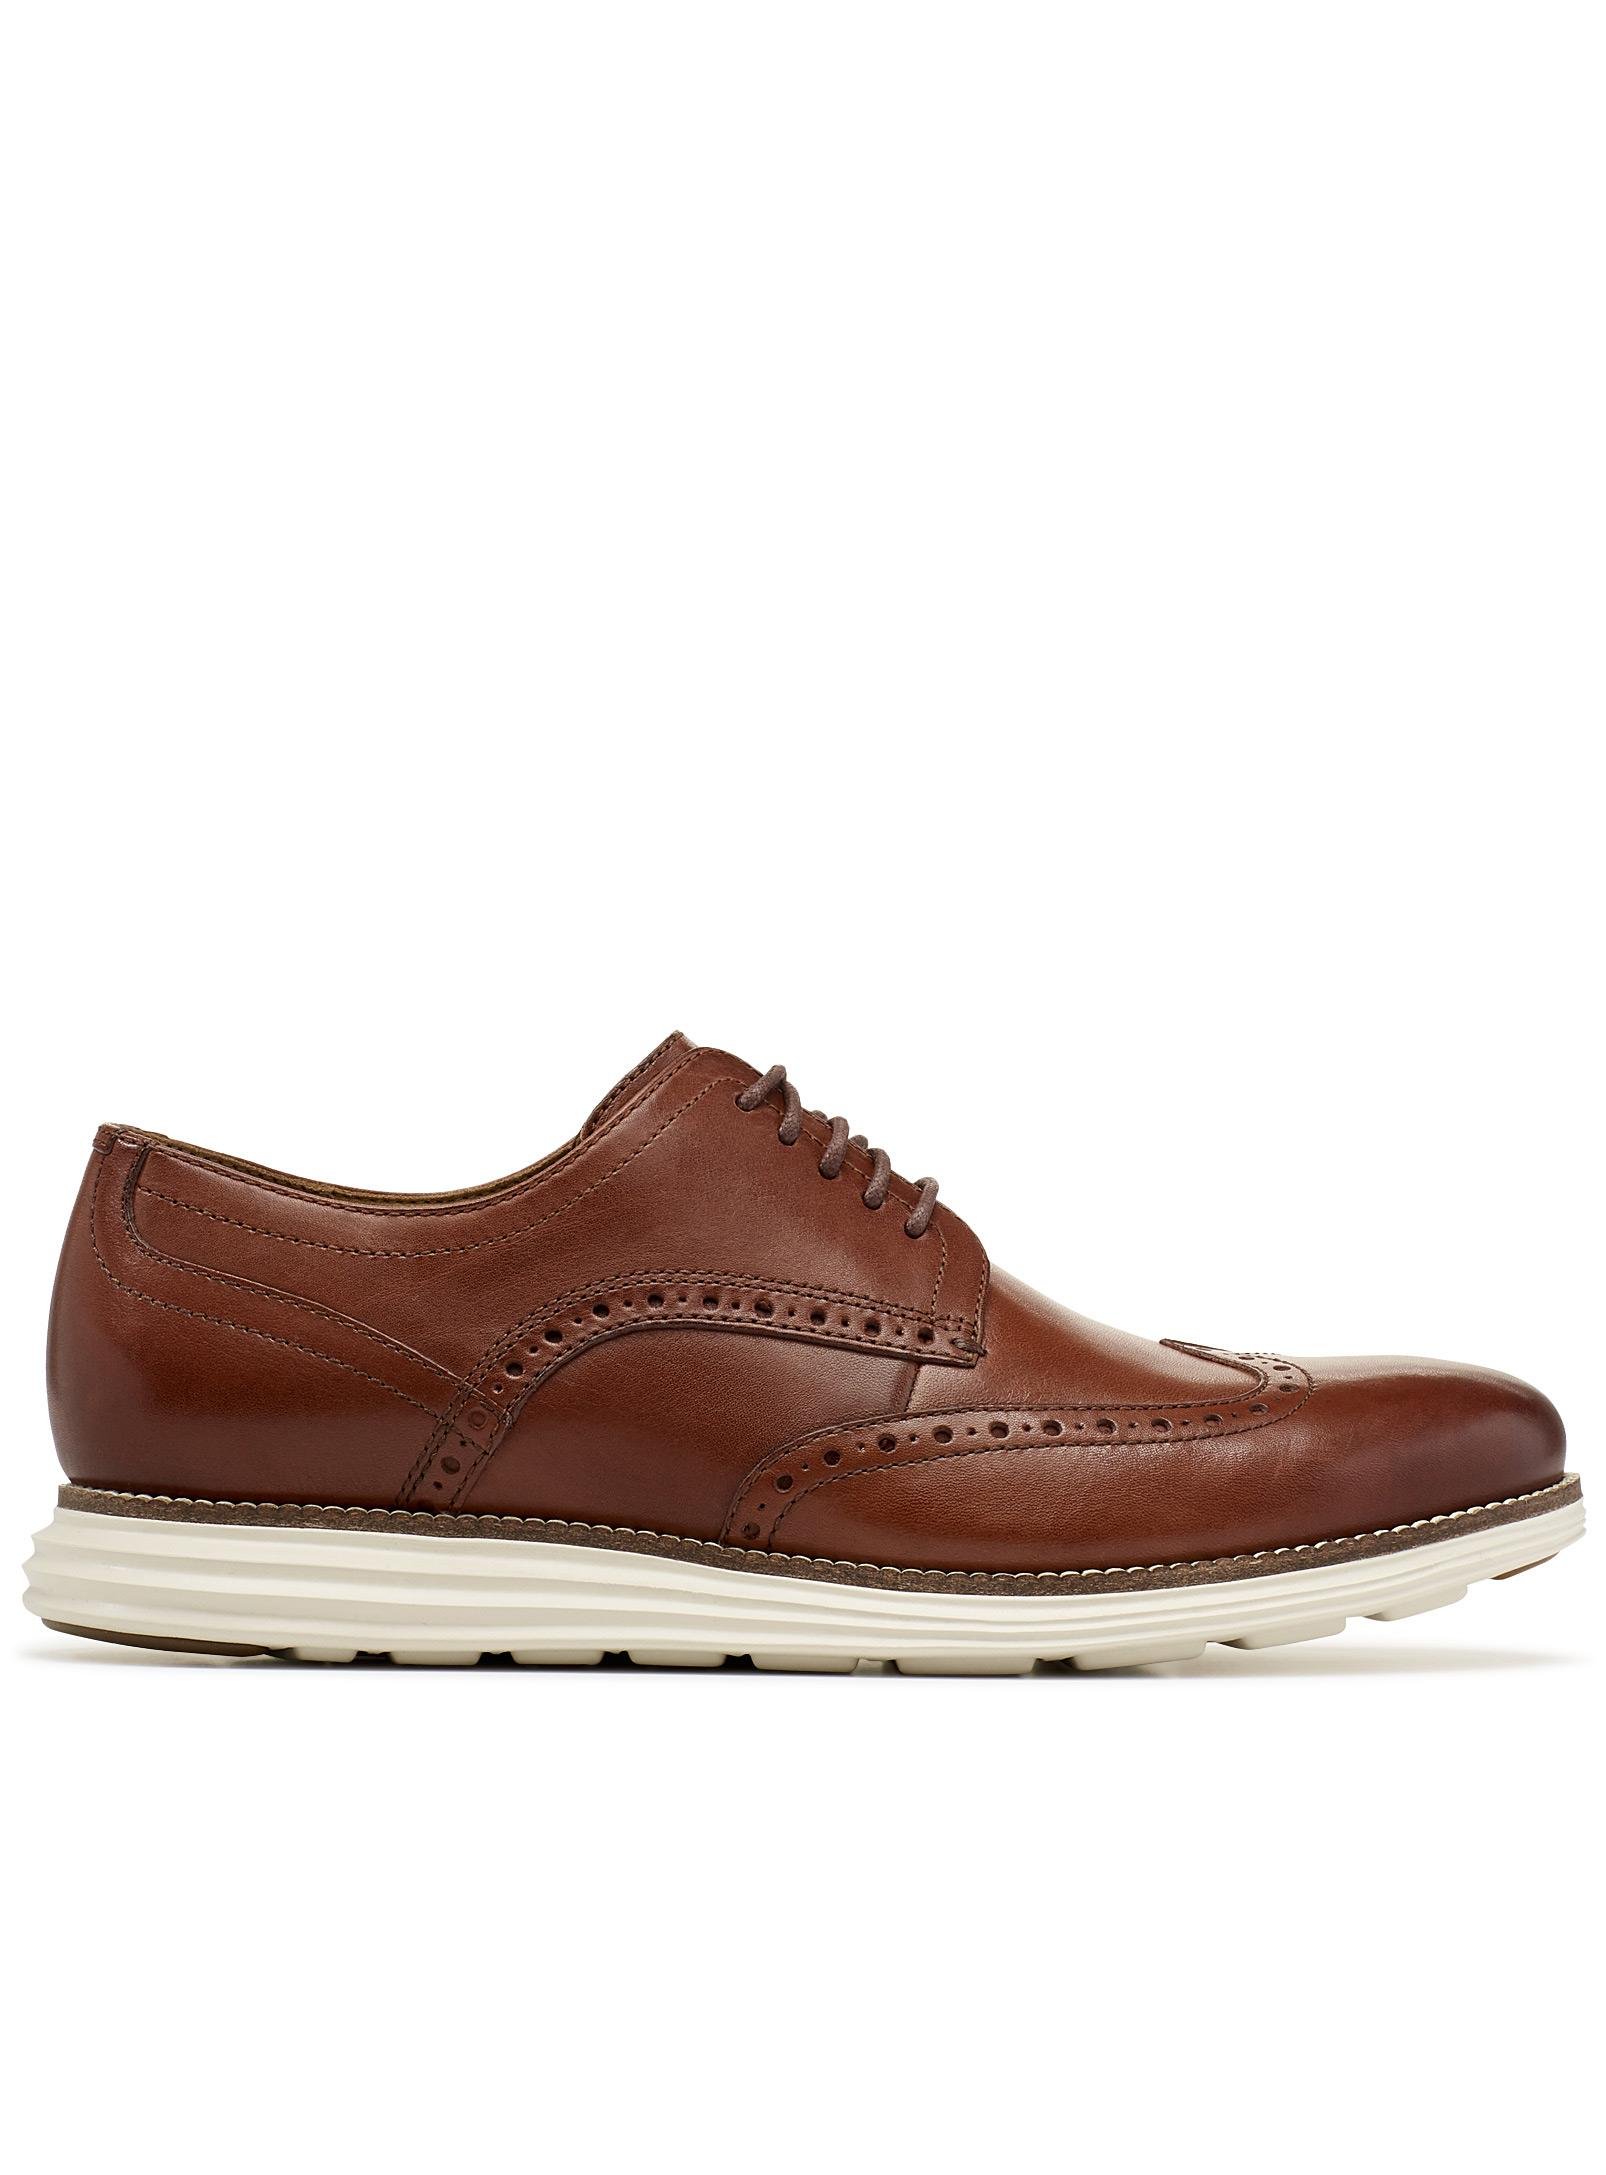 Cole Haan Leather Originalgrand Wingtip Shoes in Brown for Men - Lyst